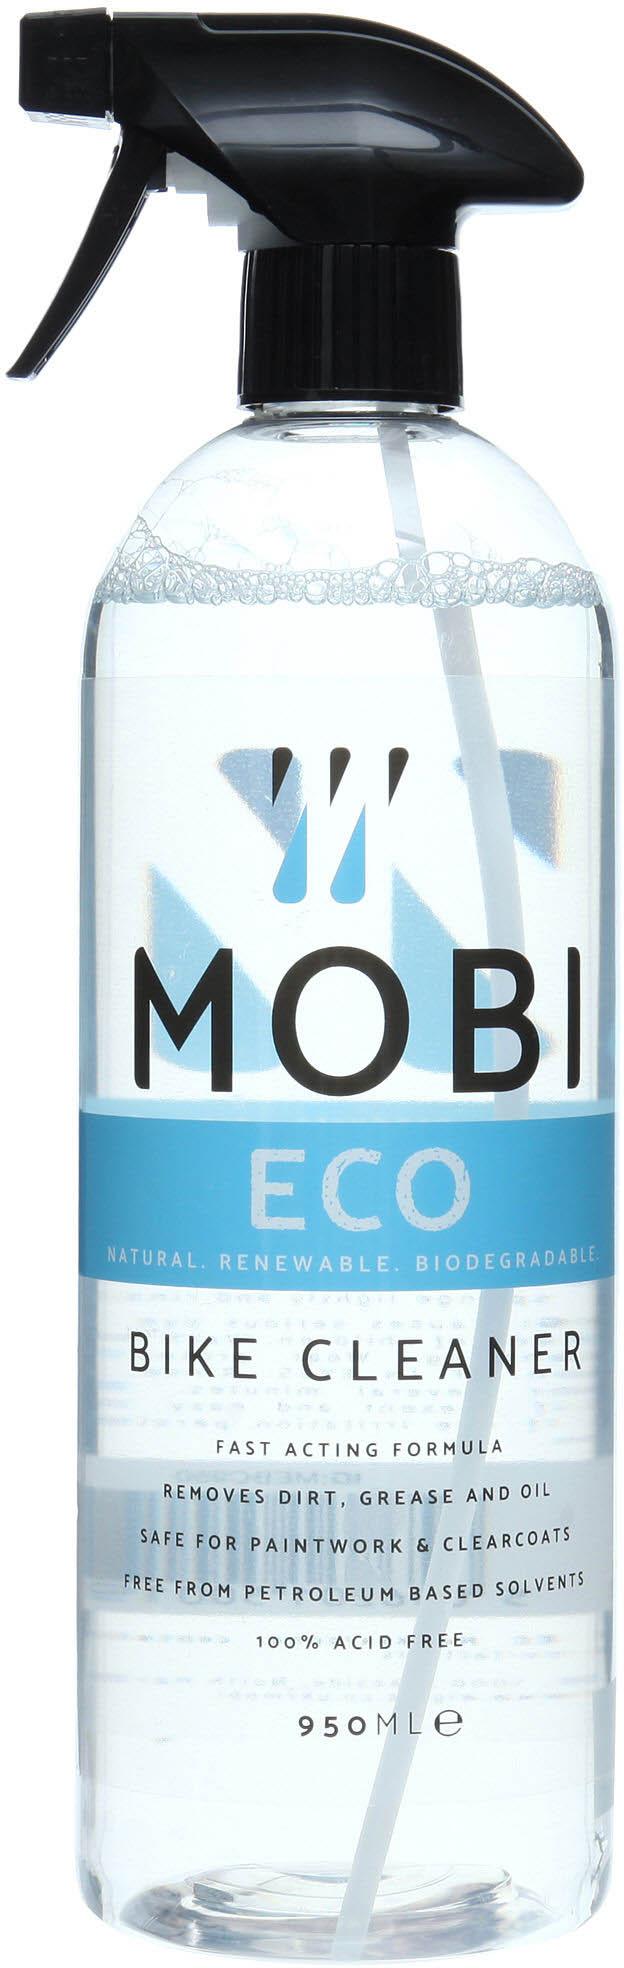 Mobi Eco Bike Cleaner (950ml)  Transparent